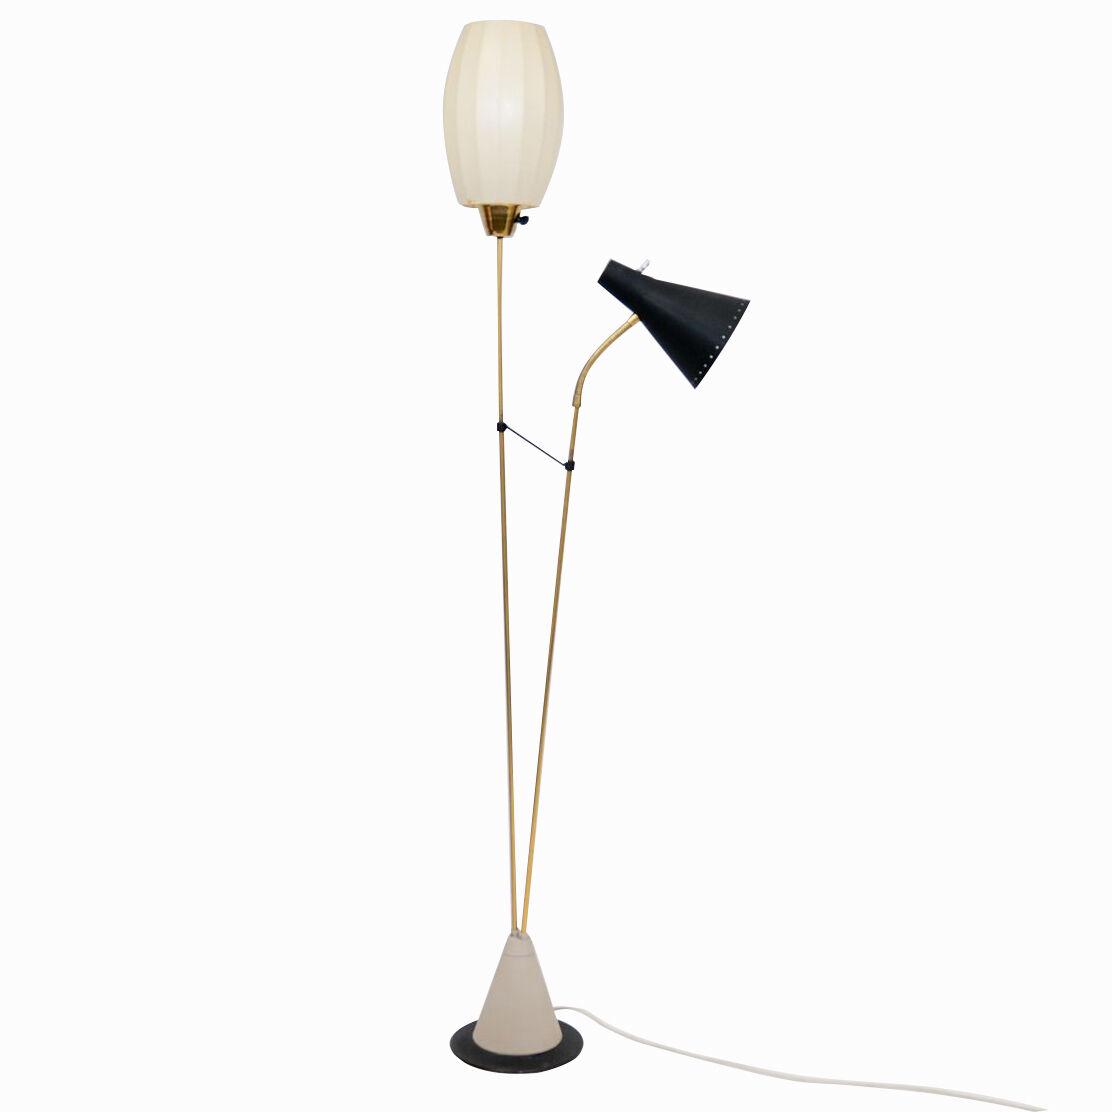 Midcentury Floor Lamp Attributed to Hans Bergström for Ateljé Lyktan